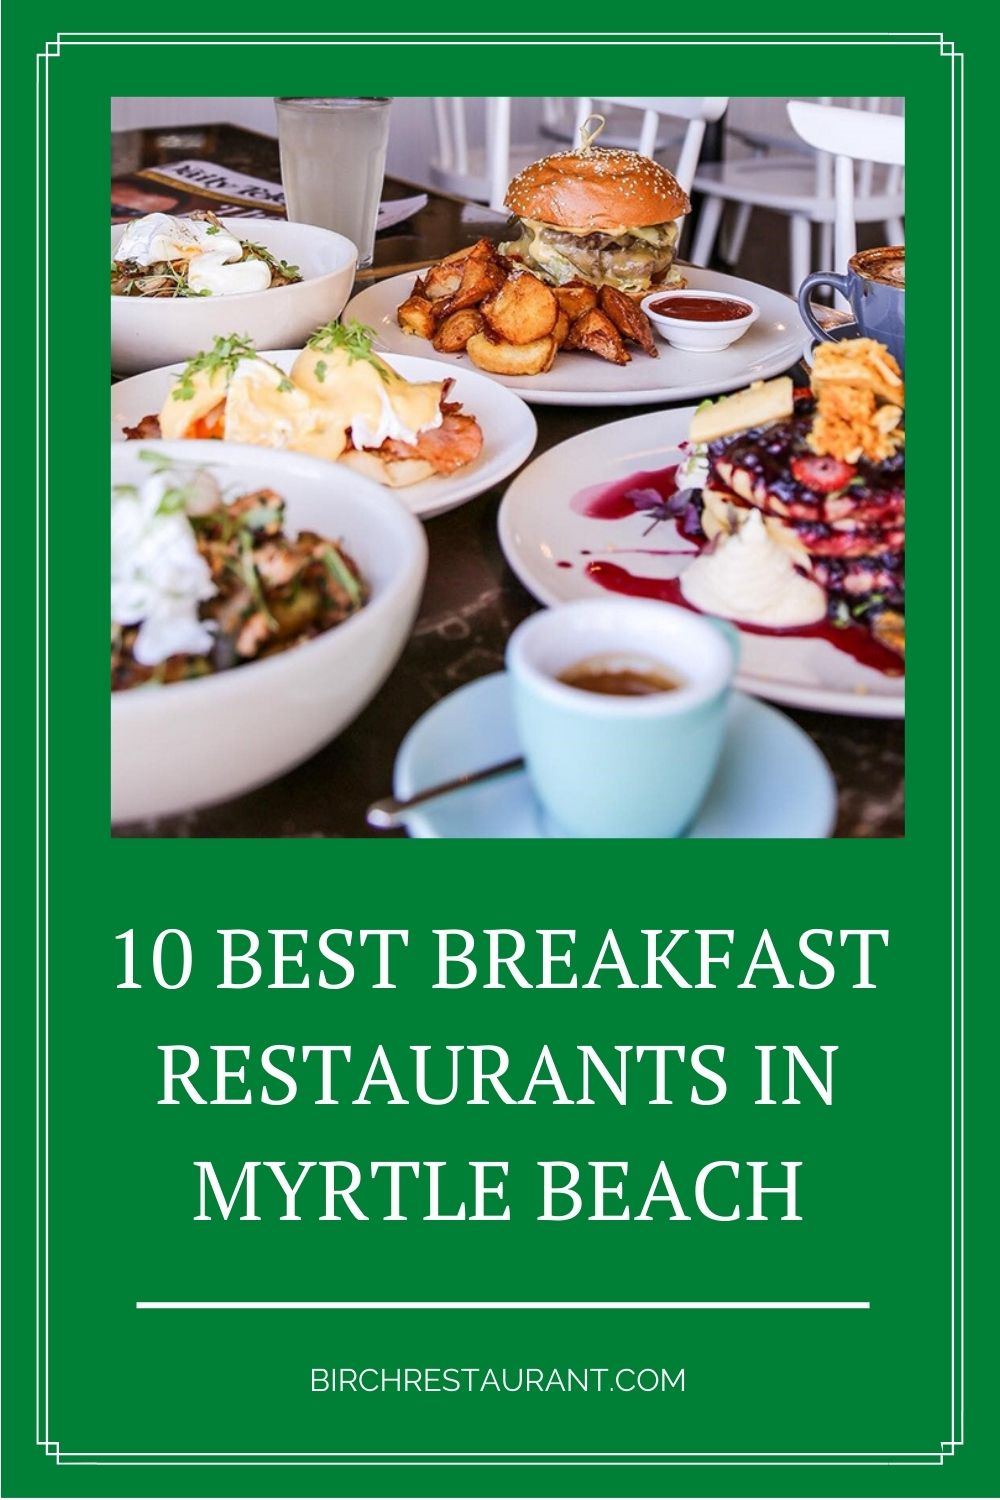 Breakfast Restaurants in Myrtle Beach